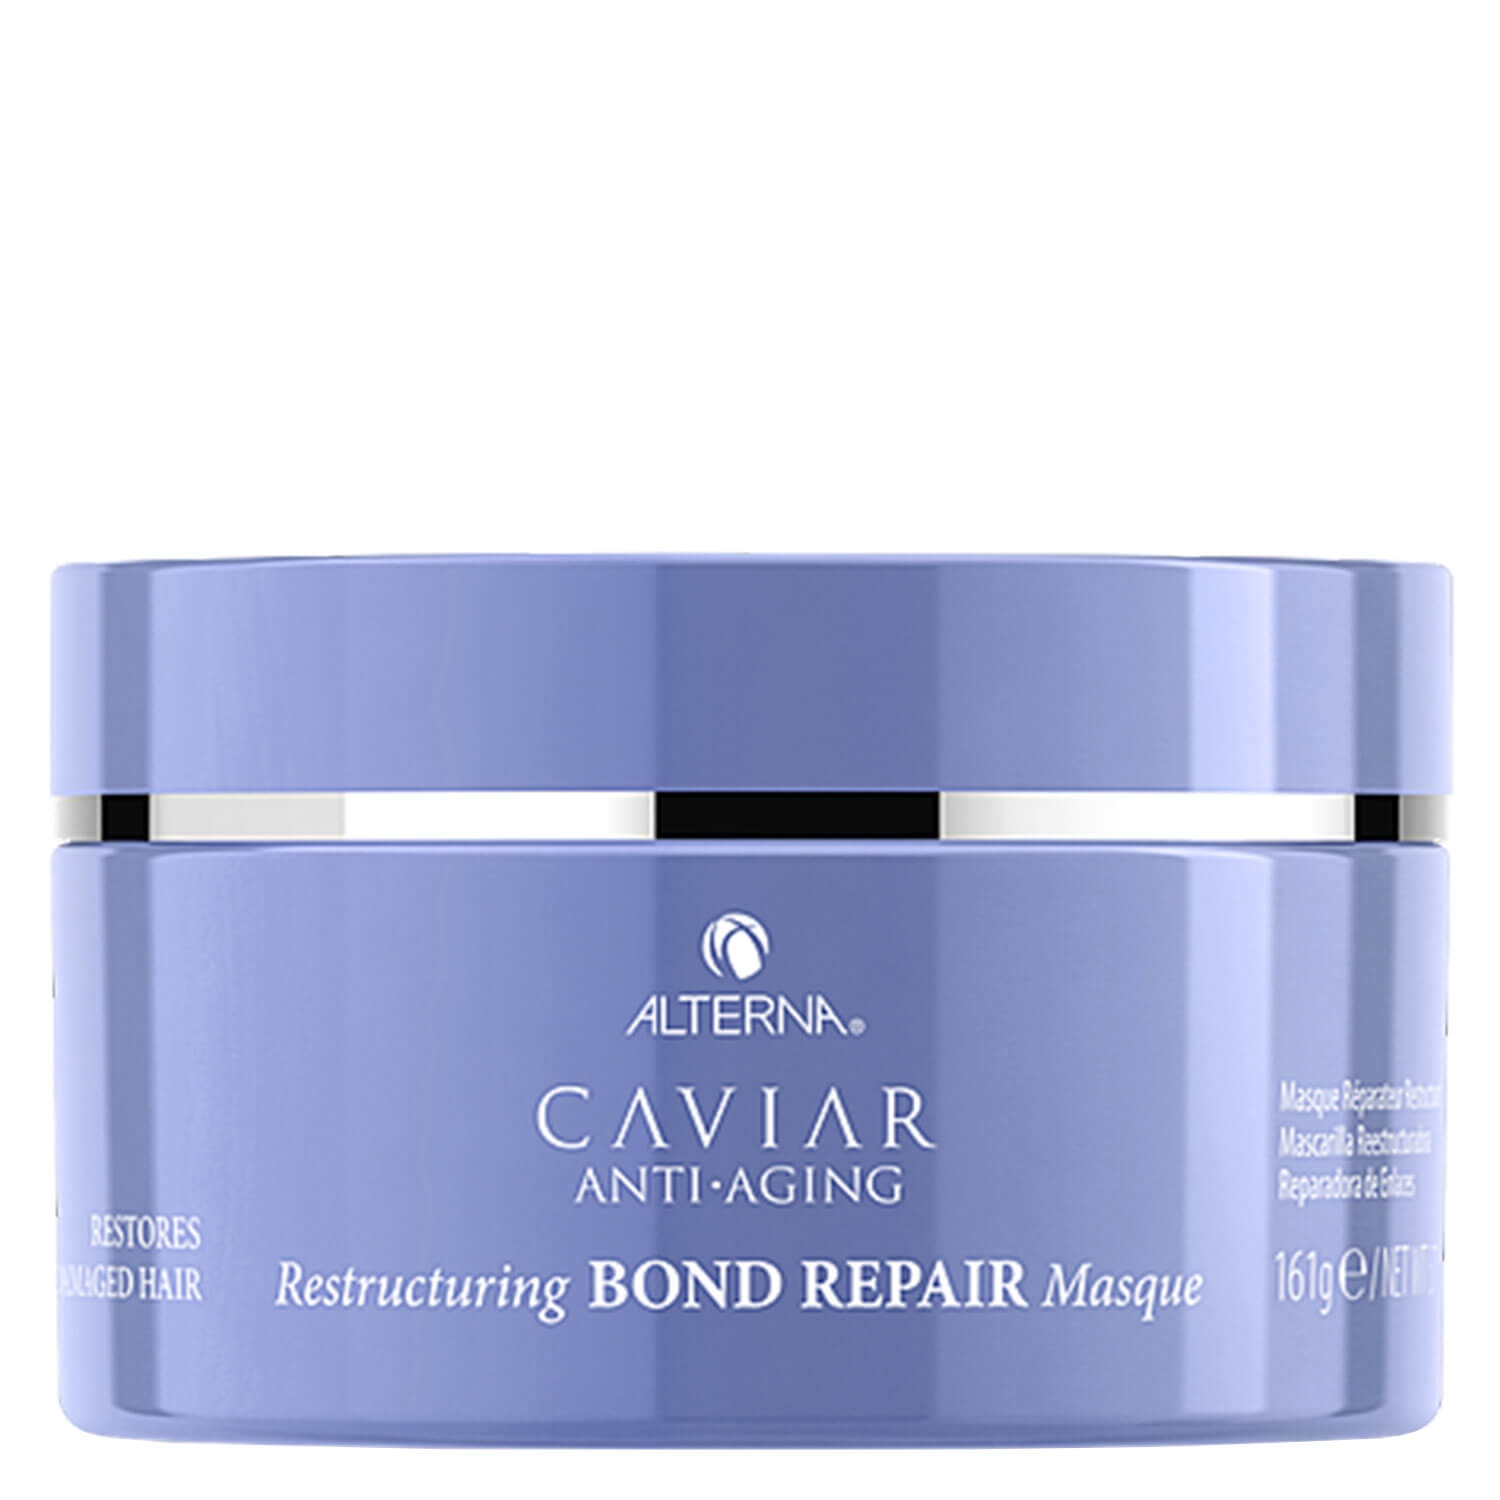 Image du produit de Caviar Restructuring Bond Repair - Masque